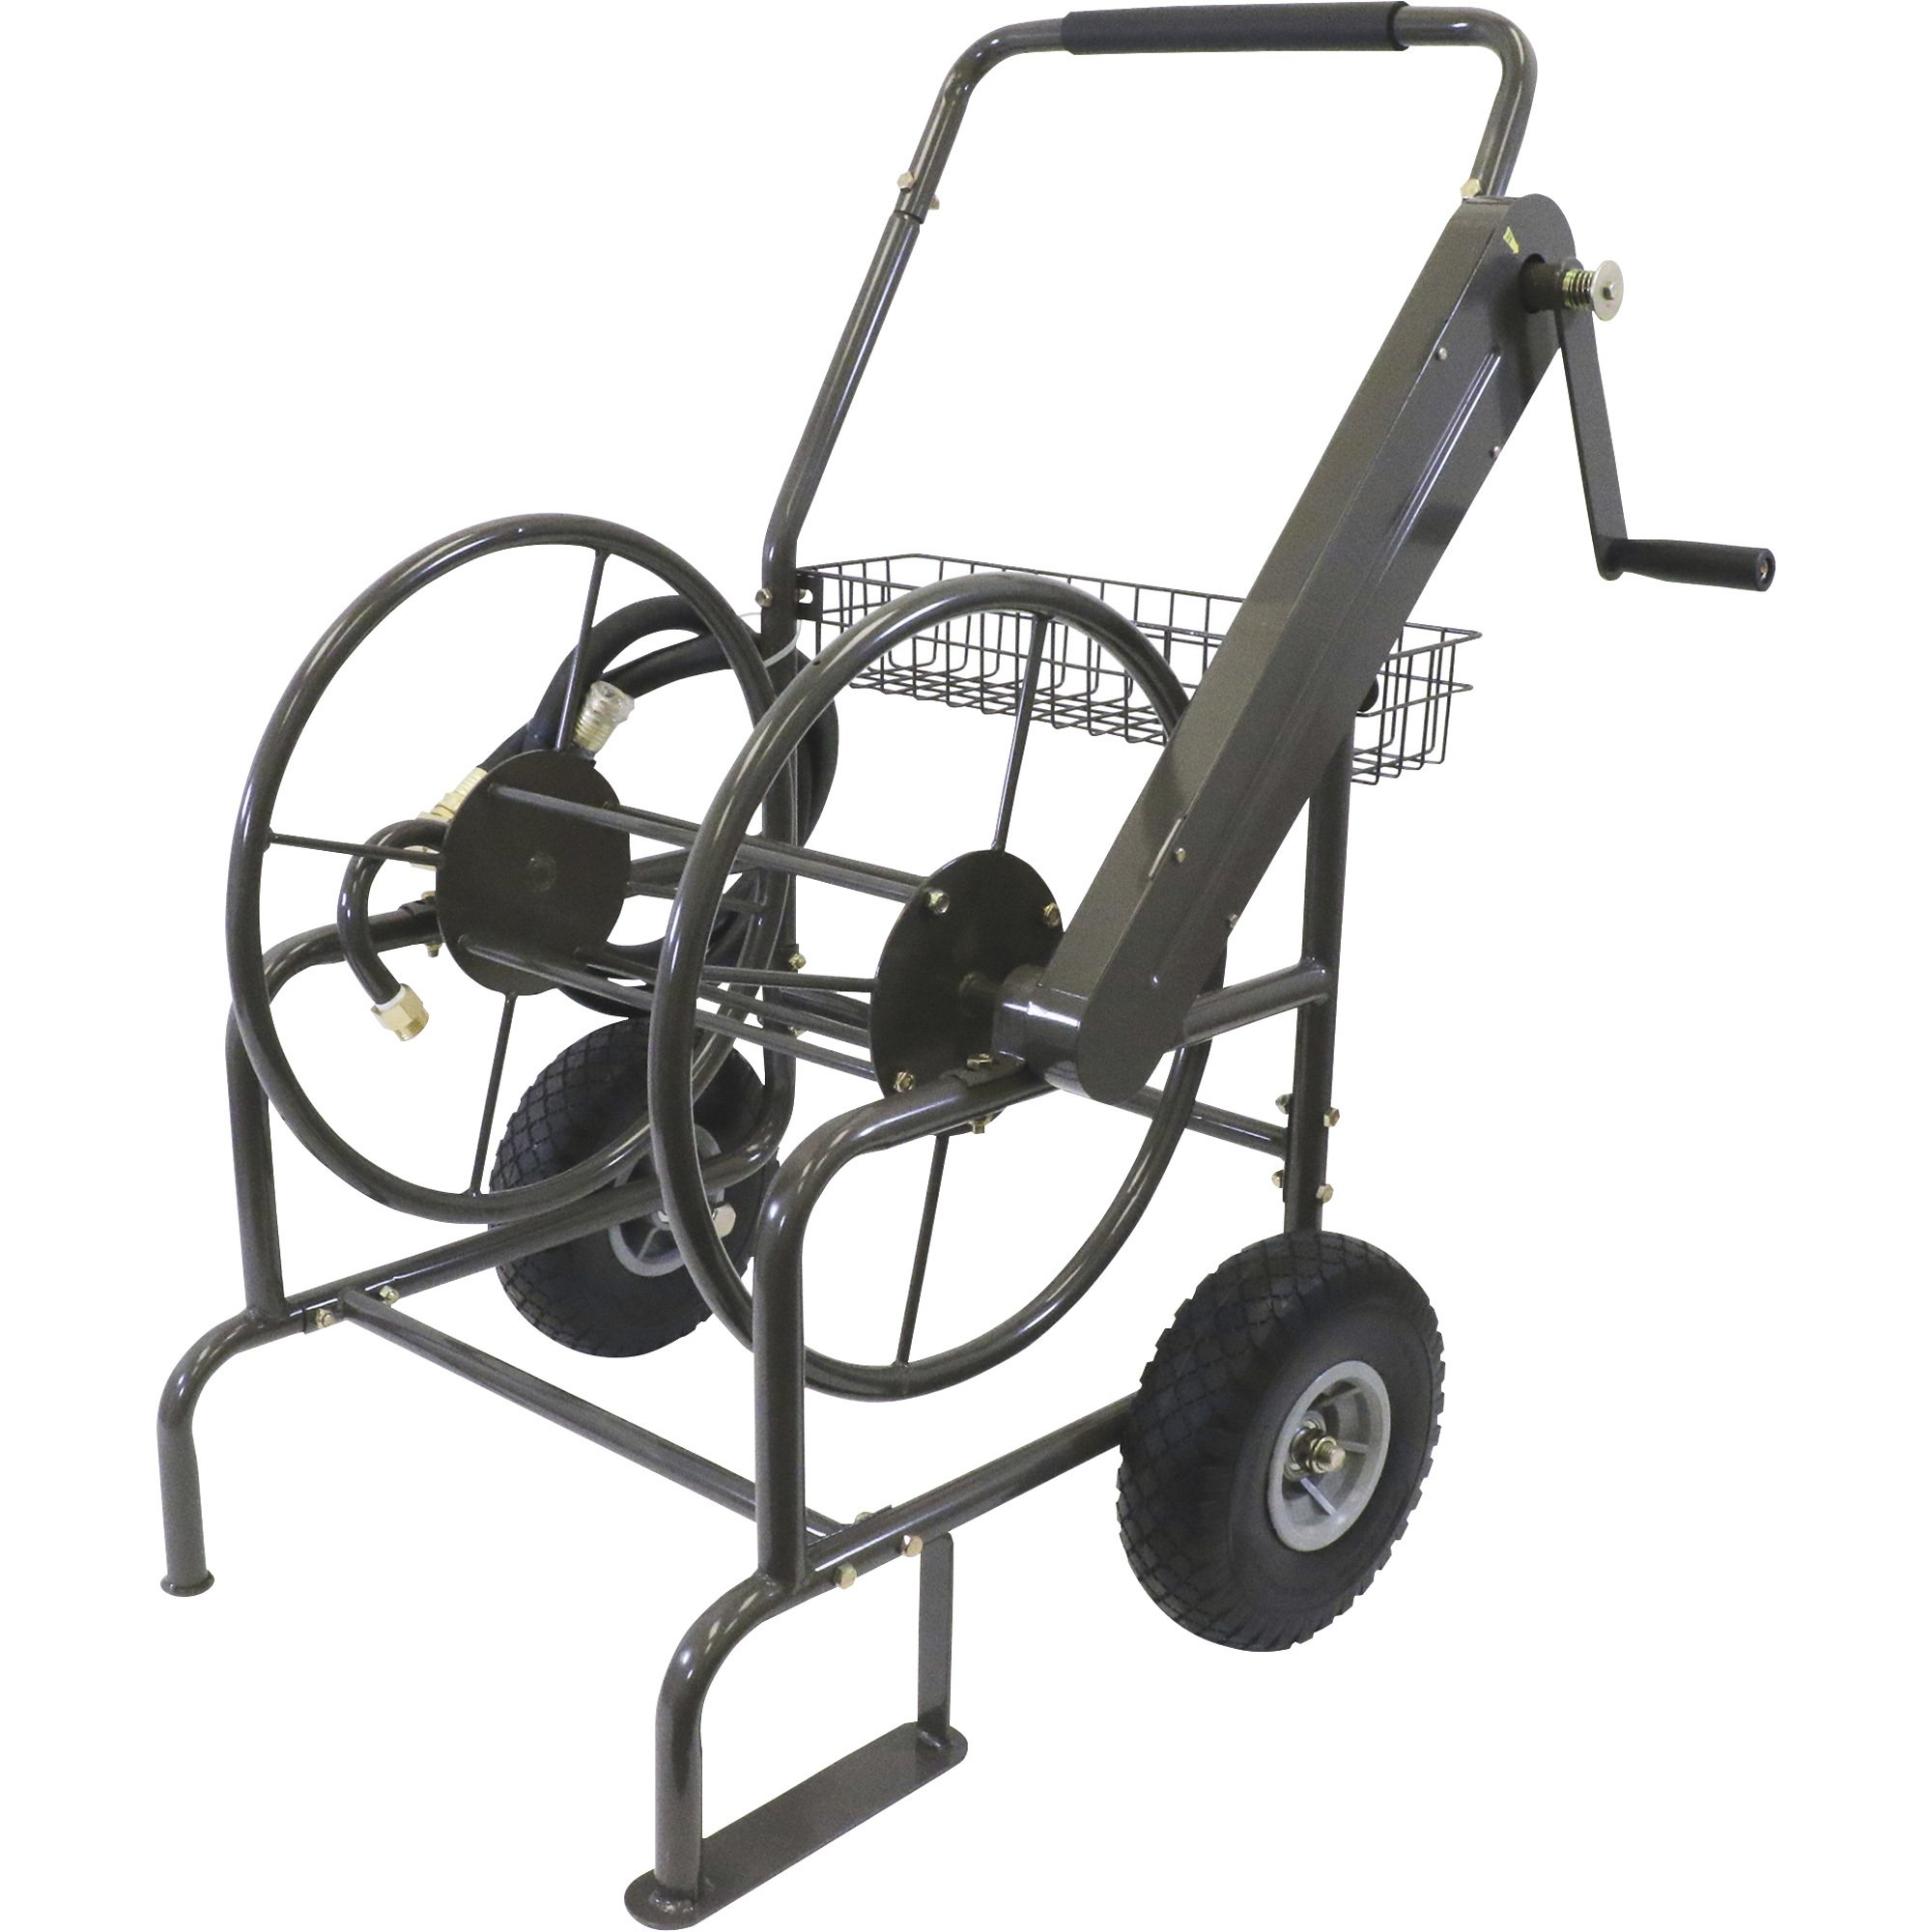 Yard Butler Hose Reel Cart With Wheels - Heavy Duty 200 Foot Metal